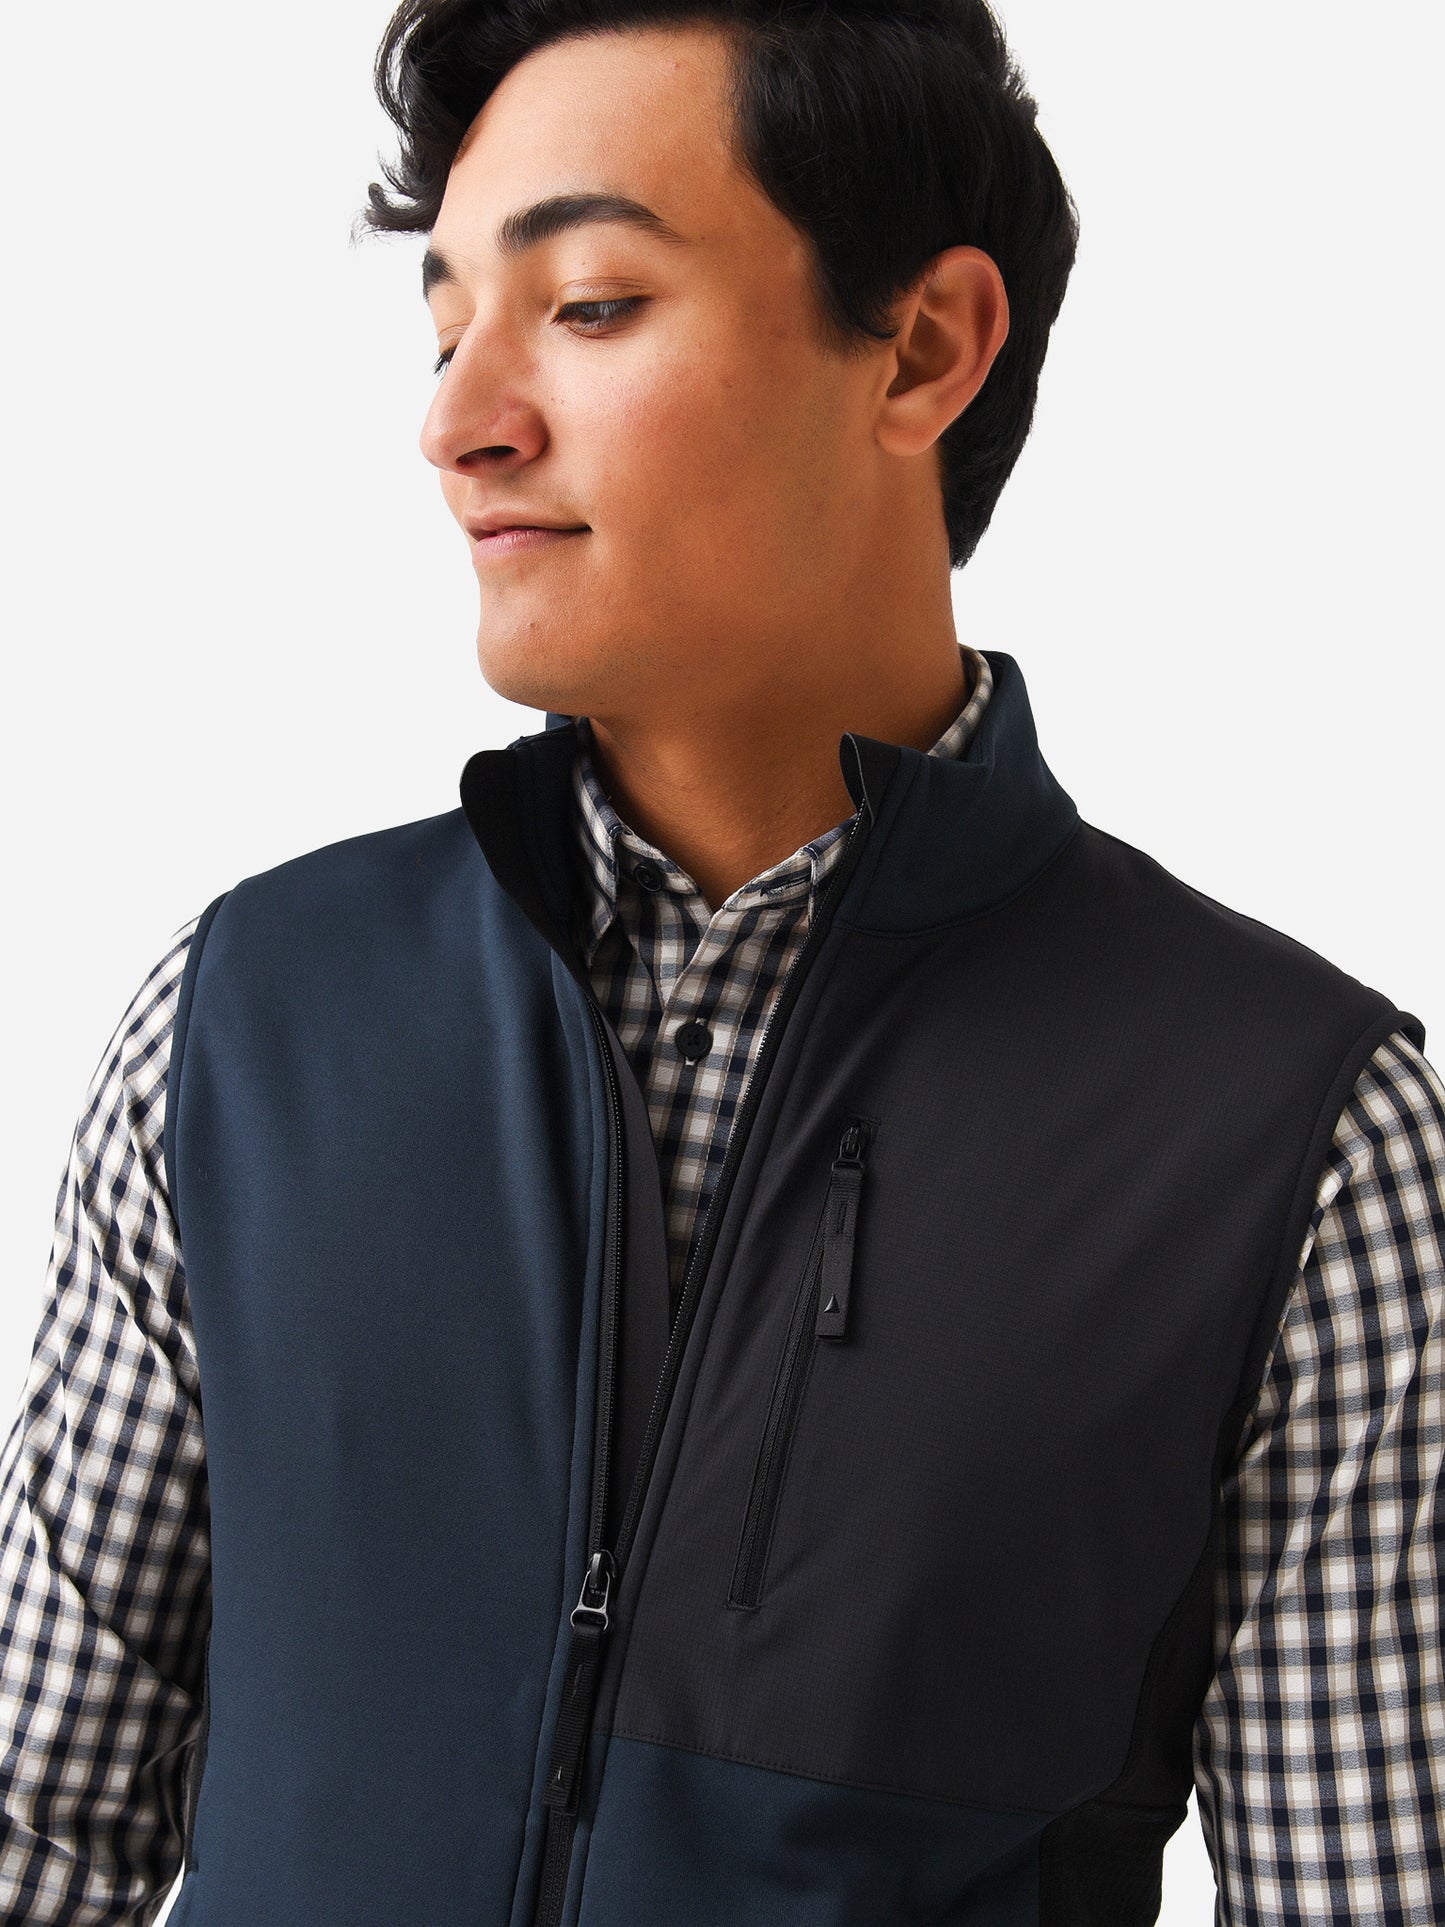 Aztech Mountain Men's Performance Fleece Vest